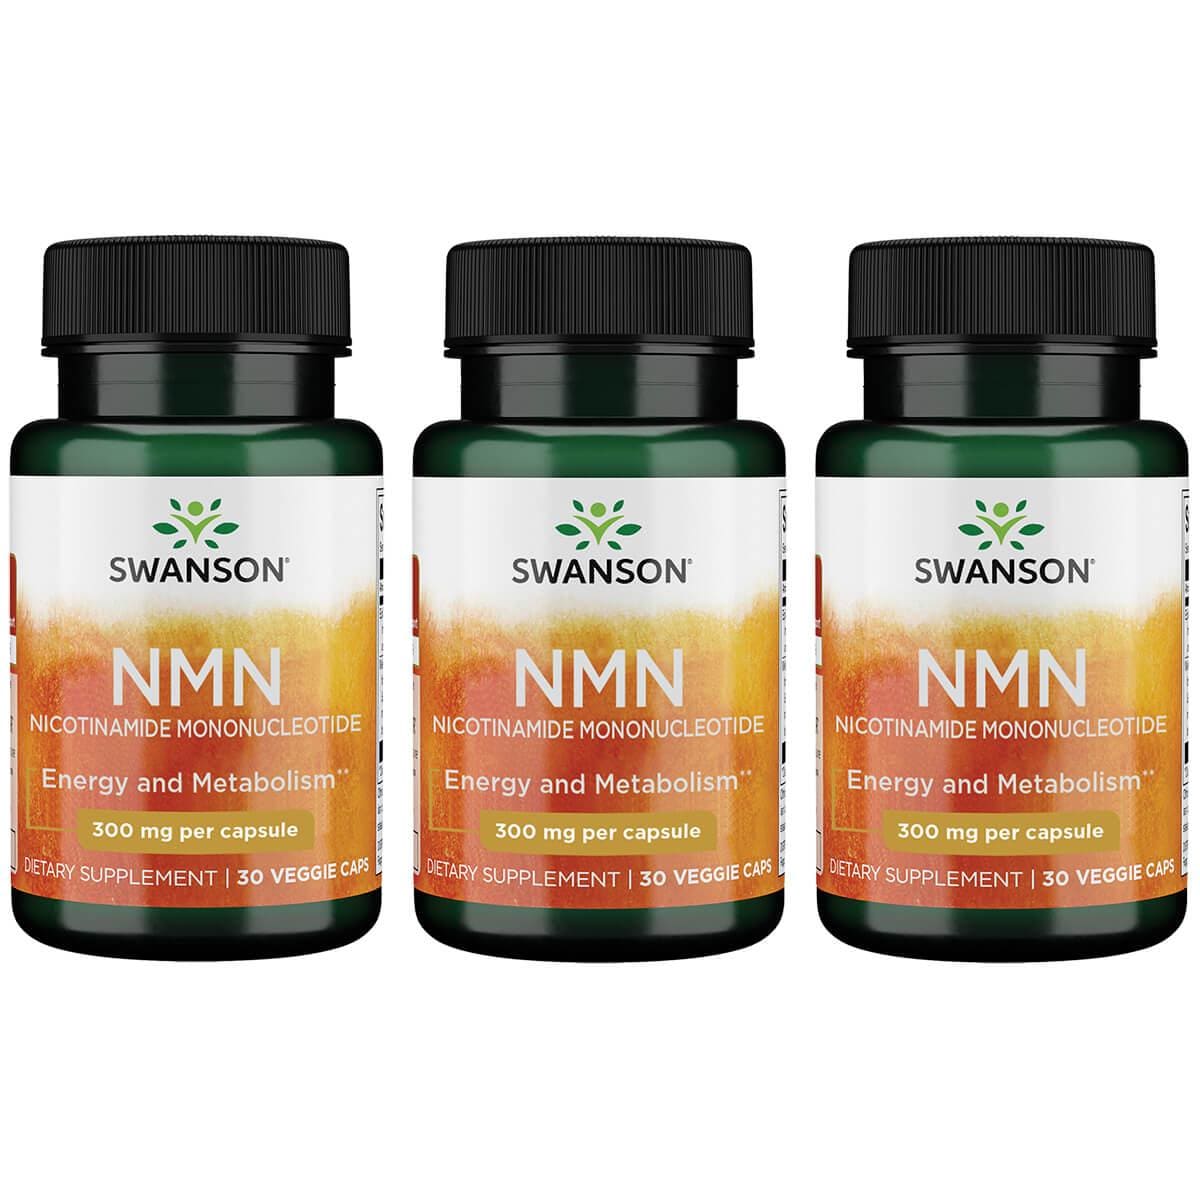 Swanson Premium Nmn Nicotinamide Mononucleotide 3 Pack Vitamin 300 mg 30 Veg Caps